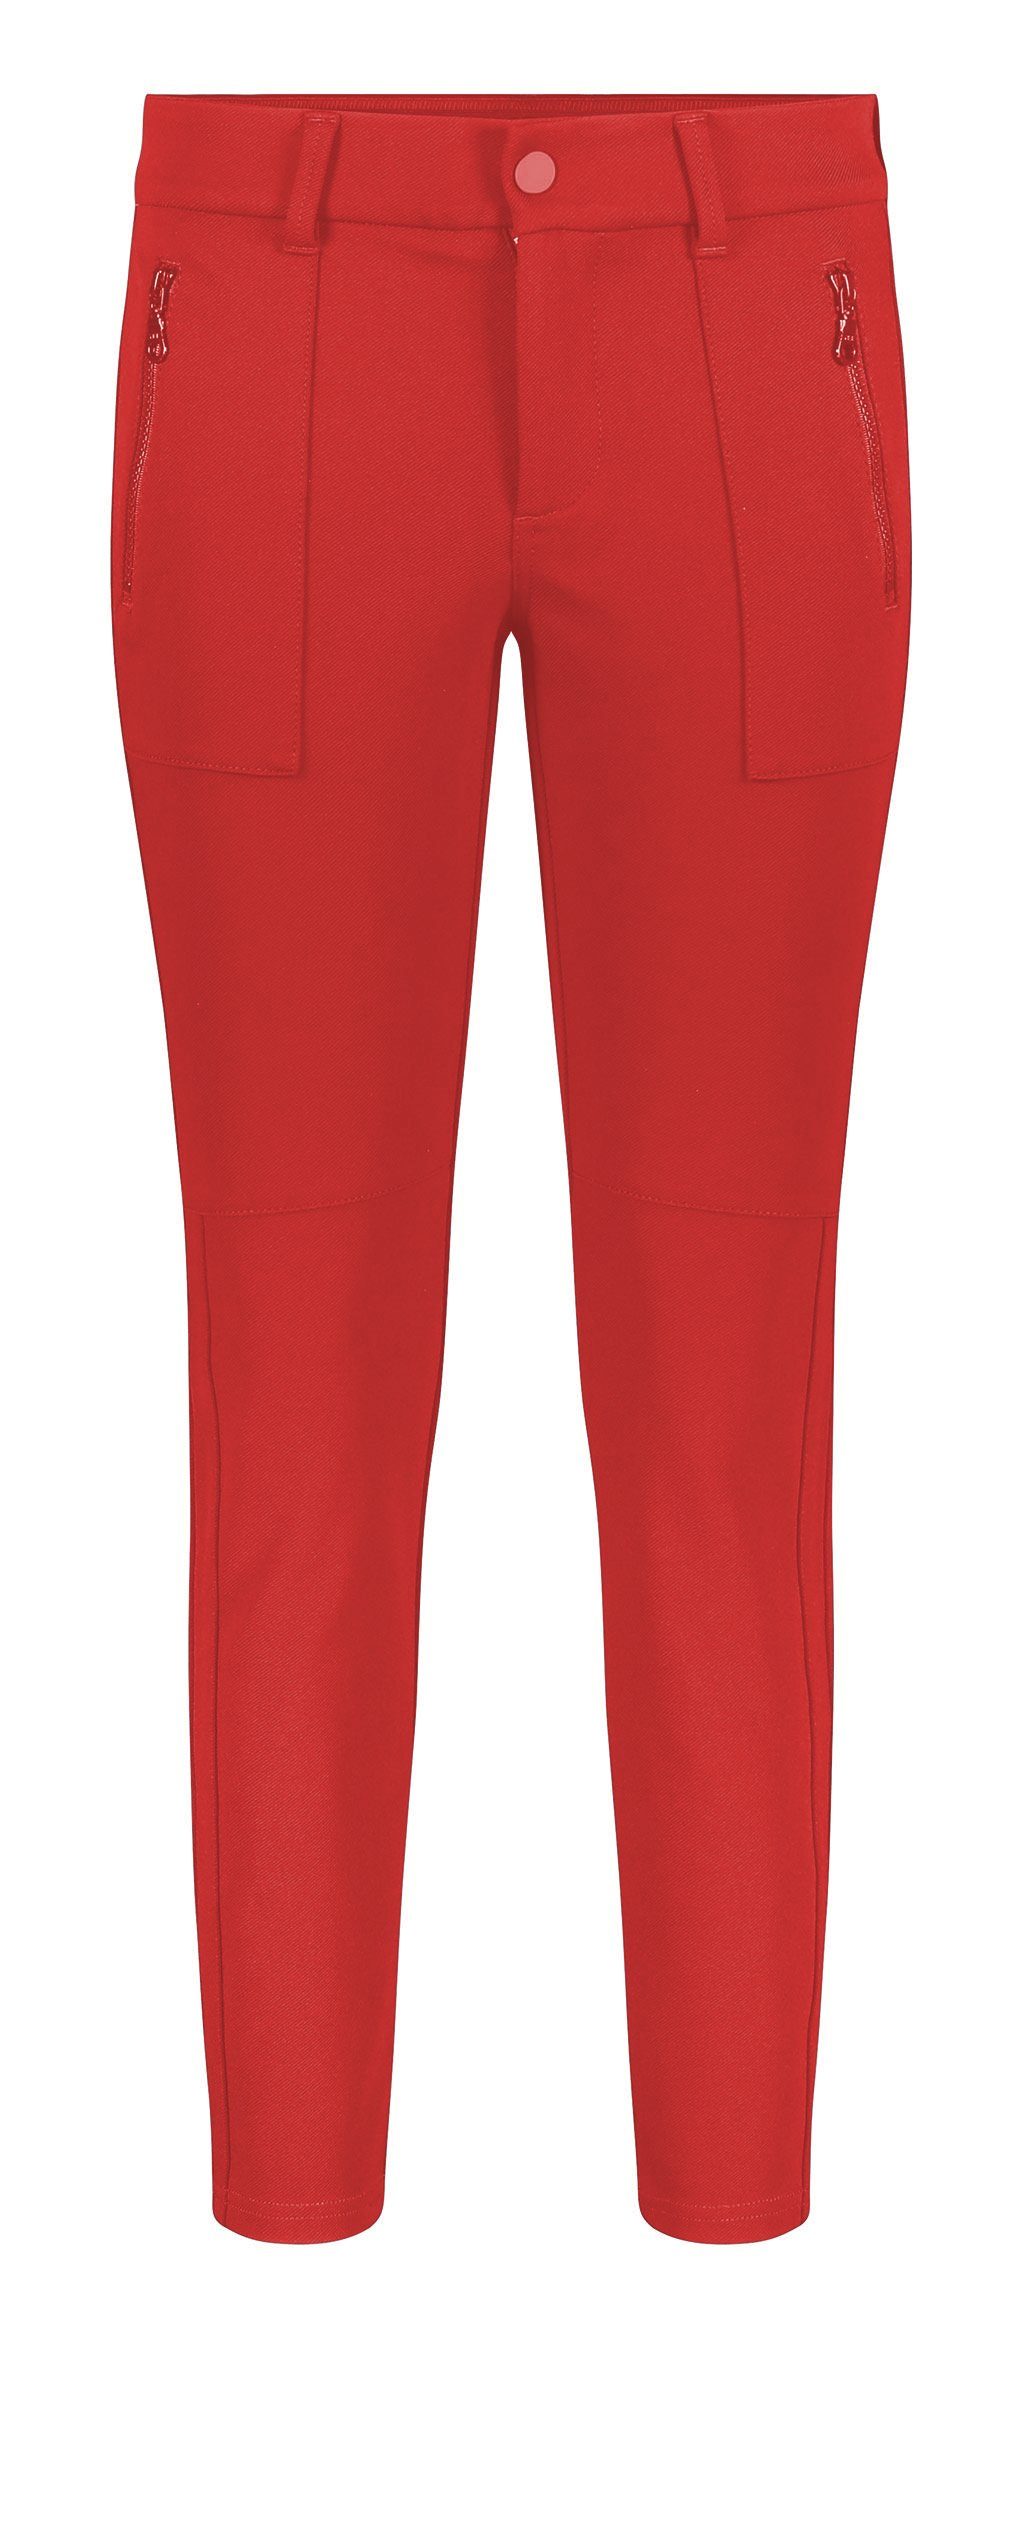 PANTS VISION MAC 5991-00-0172 892 MAC Stretch-Jeans red scarlet